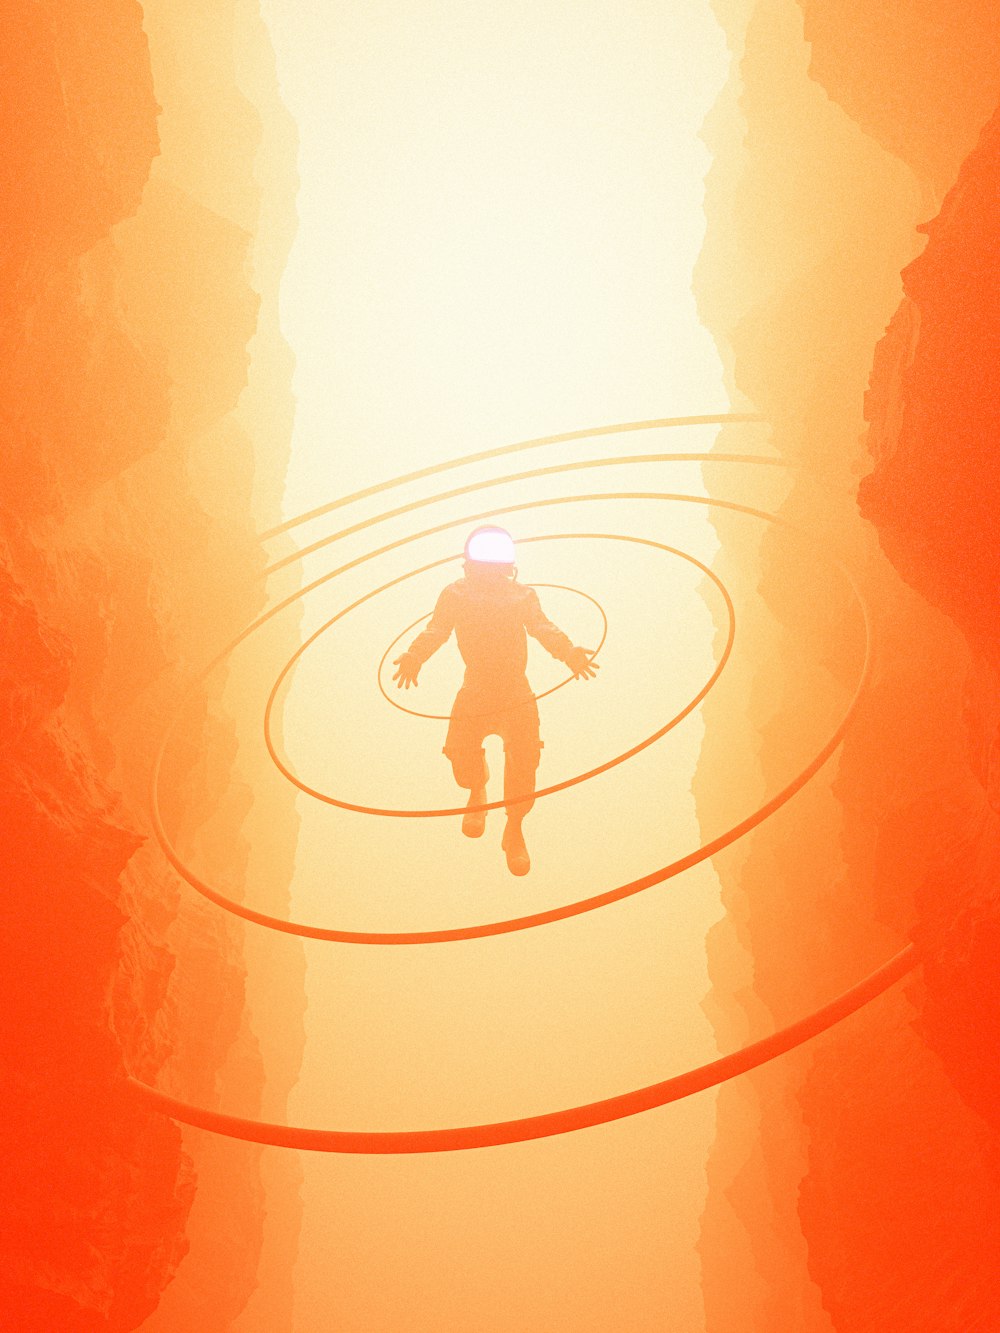 a person walking through a tunnel